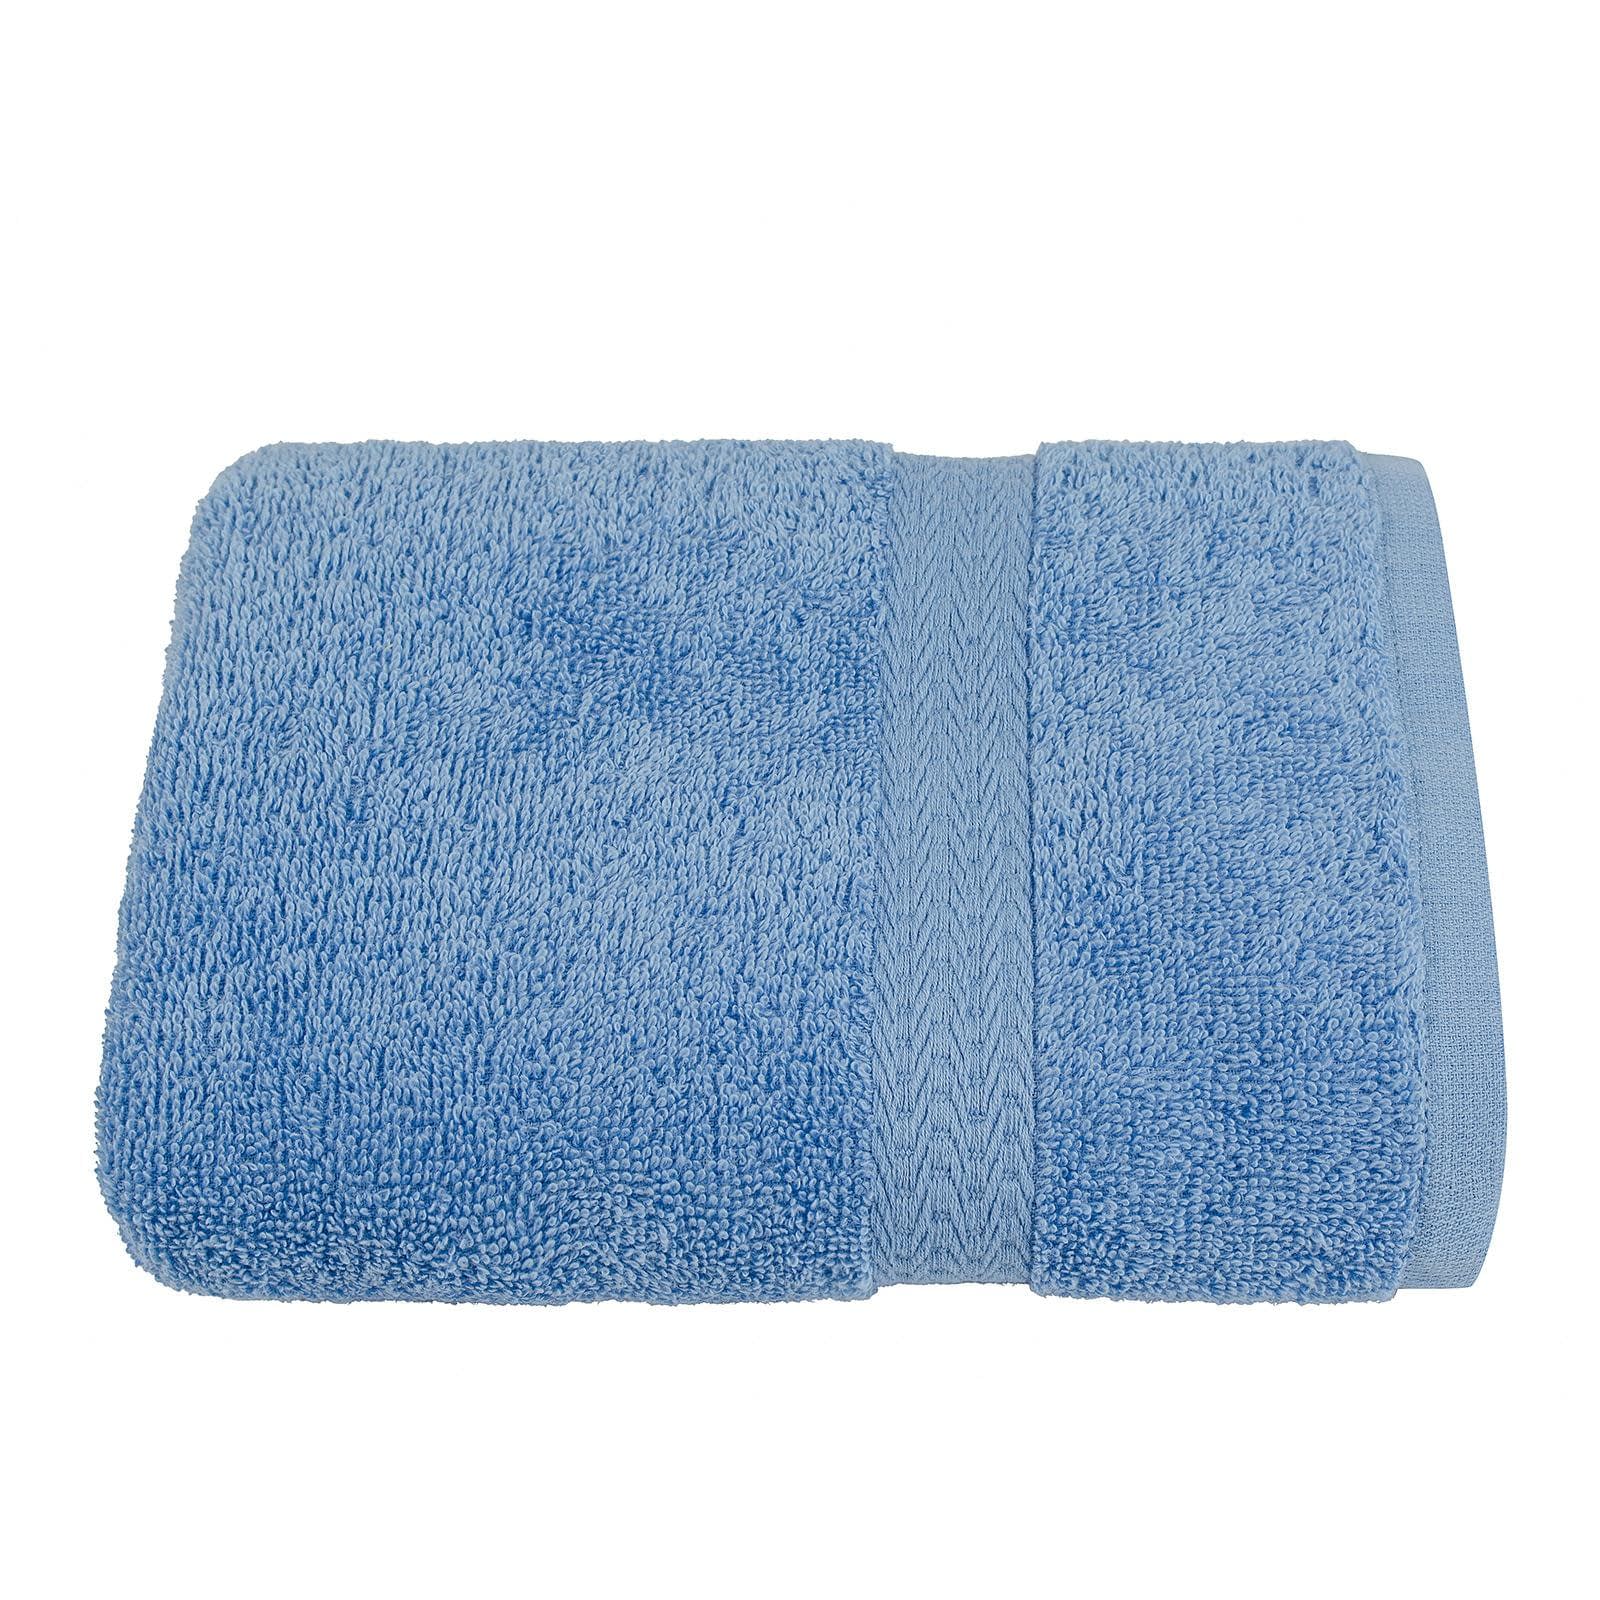 Ткани махровые полотенца - Полотенце махровое с бордюром 70х140 синее